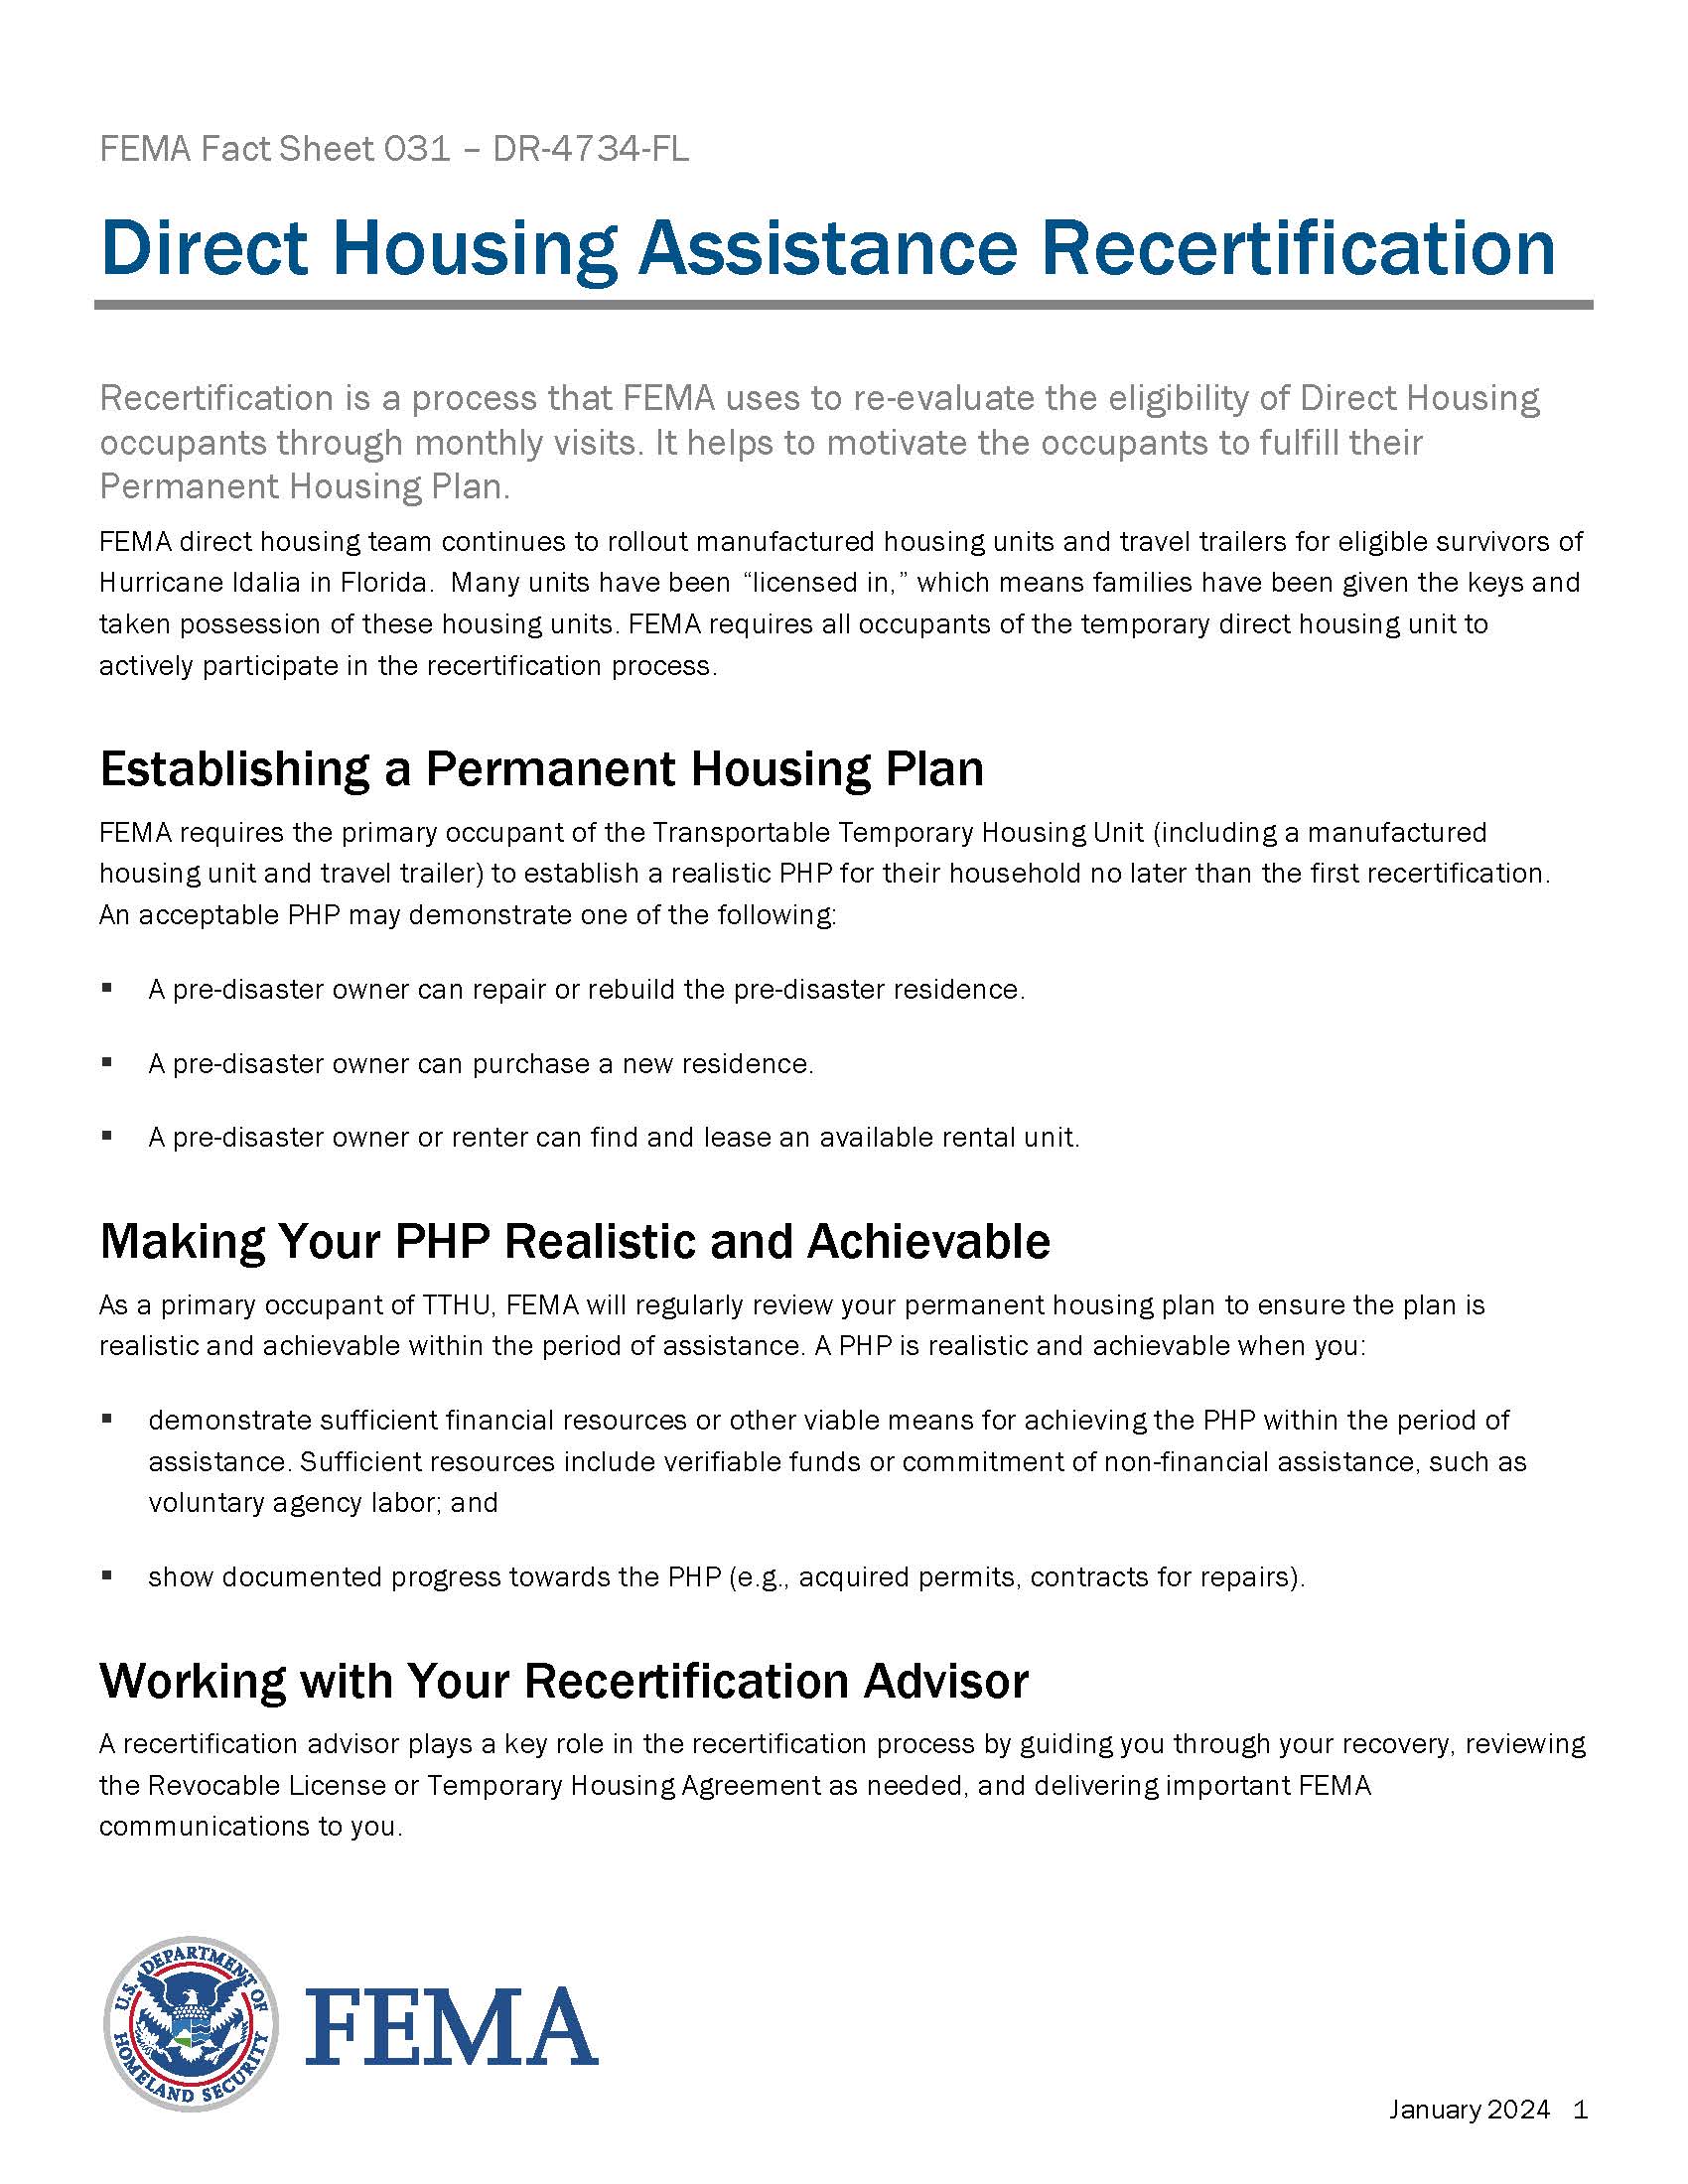 DR-4734-FL FS 031 Direct Housing Assistance Recertification_Page_1